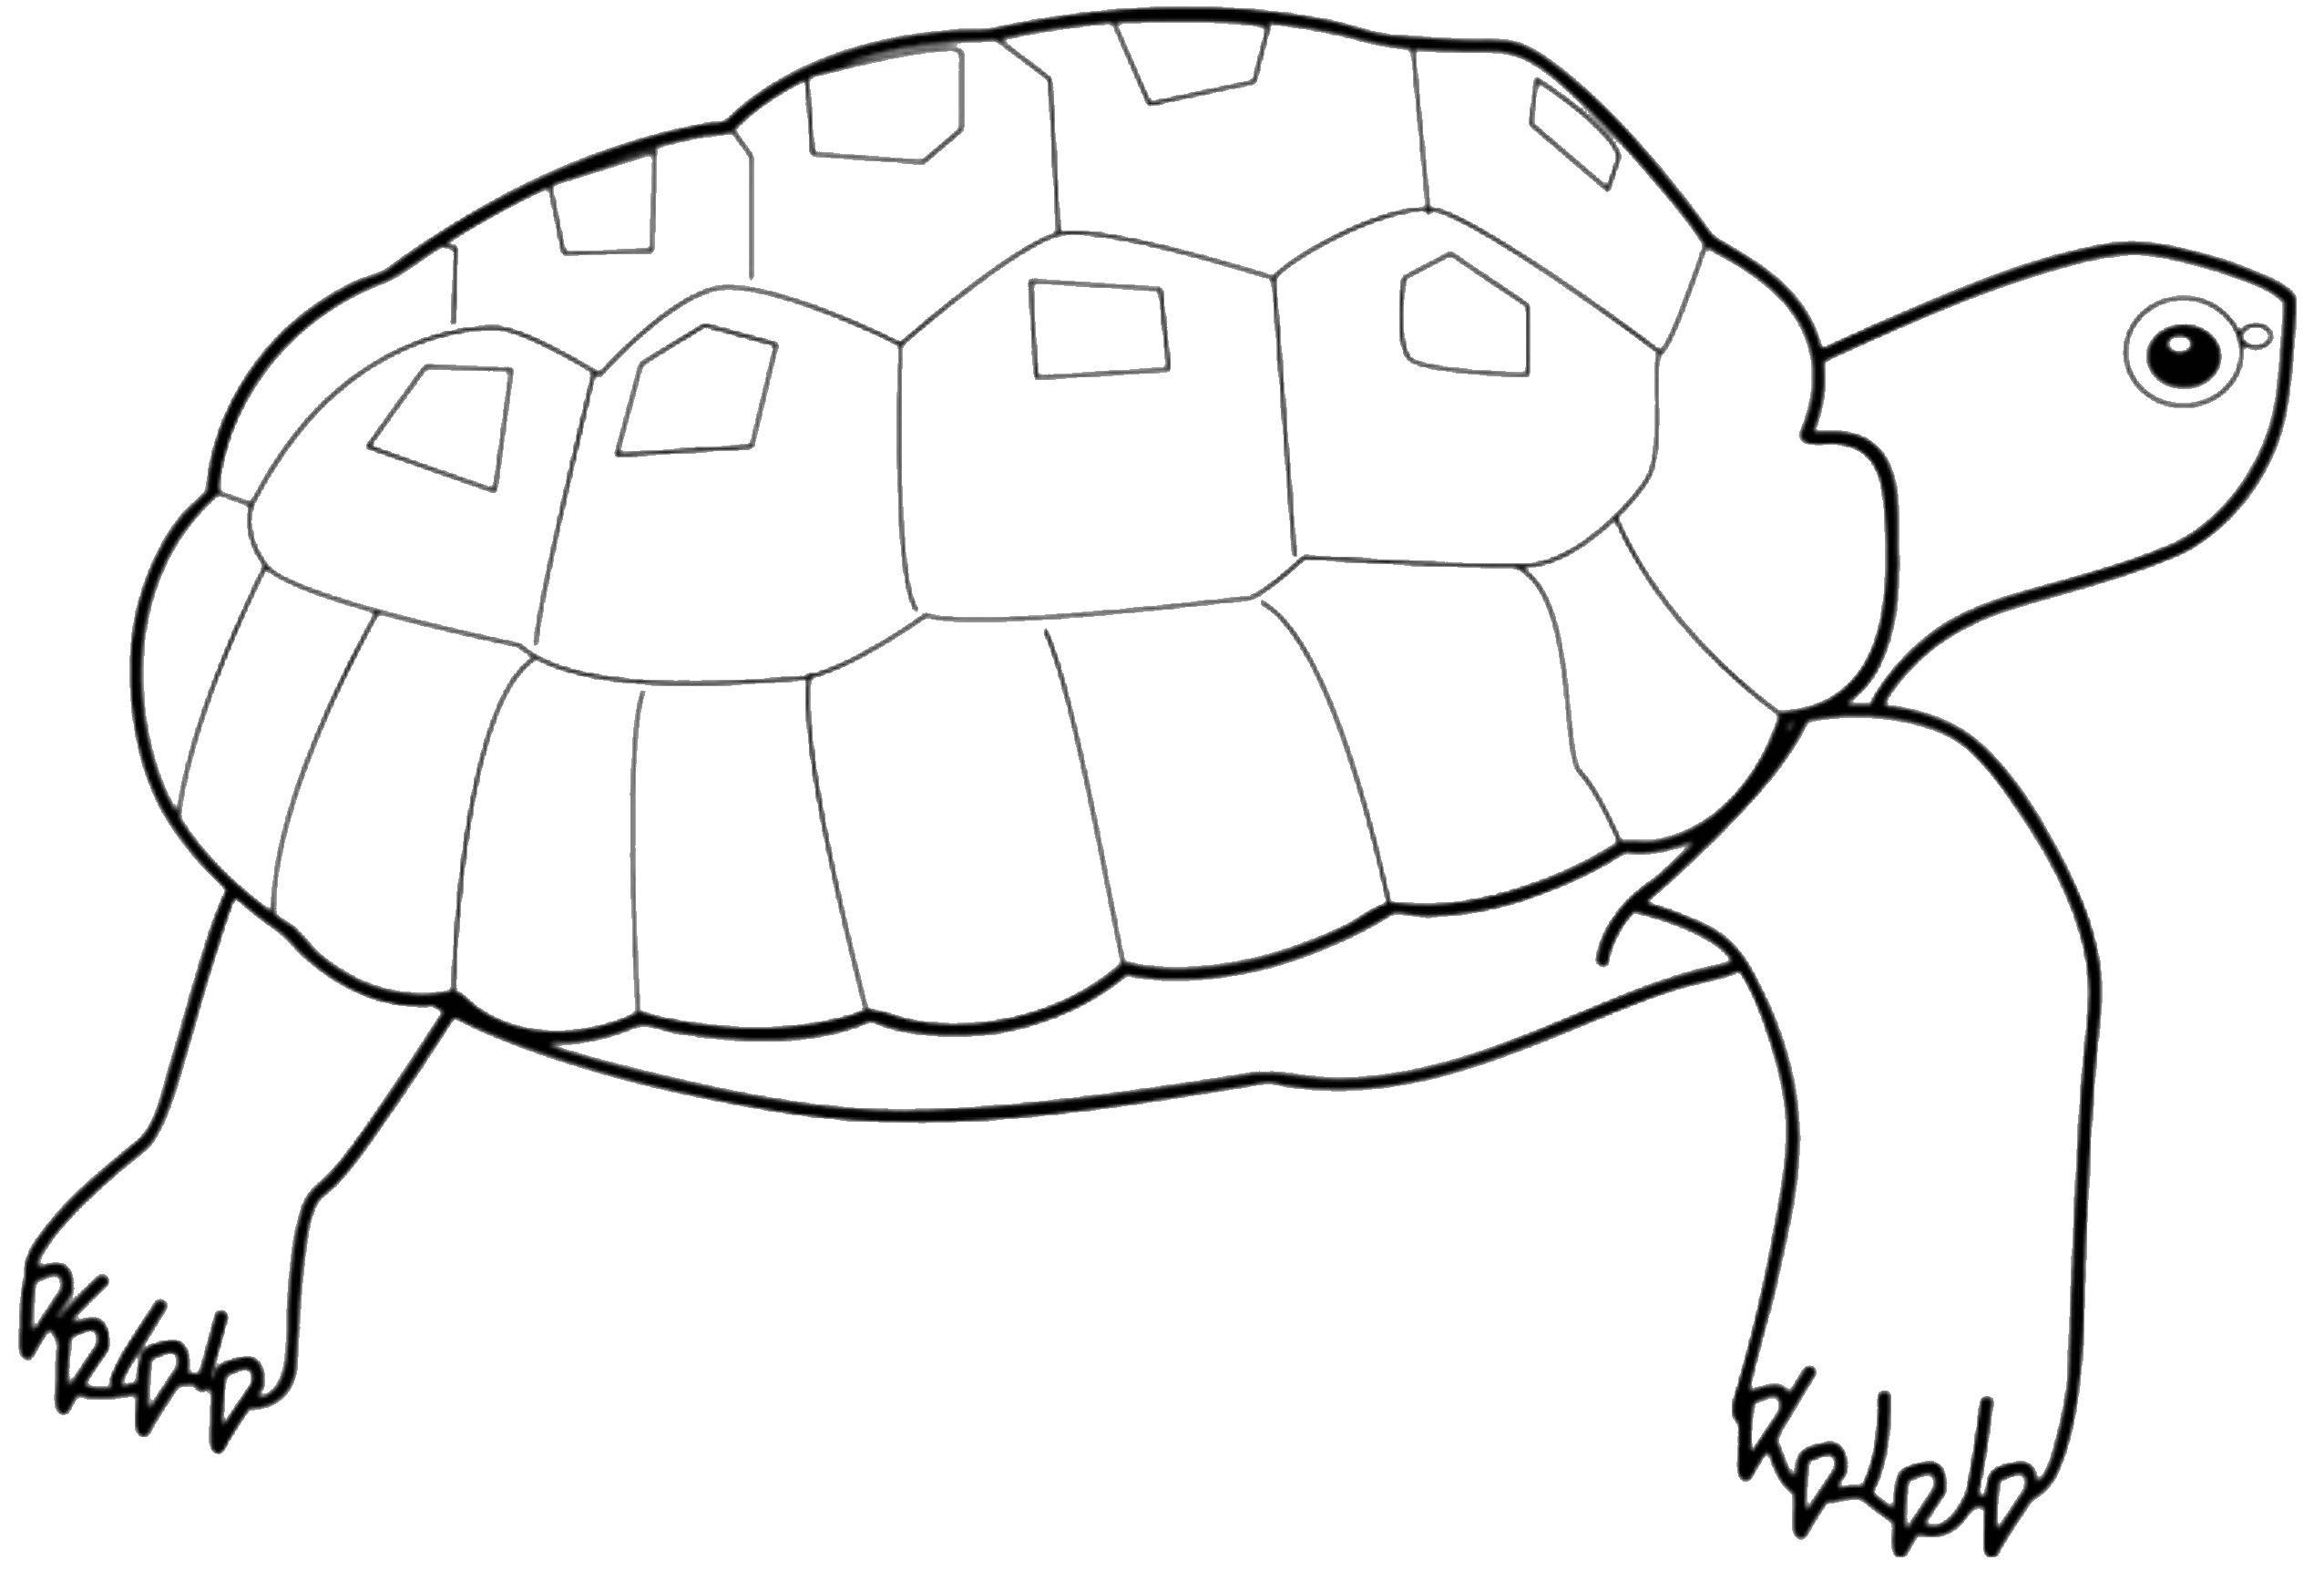 Название: Раскраска Черепаха. Категория: Животные. Теги: черепаха, .